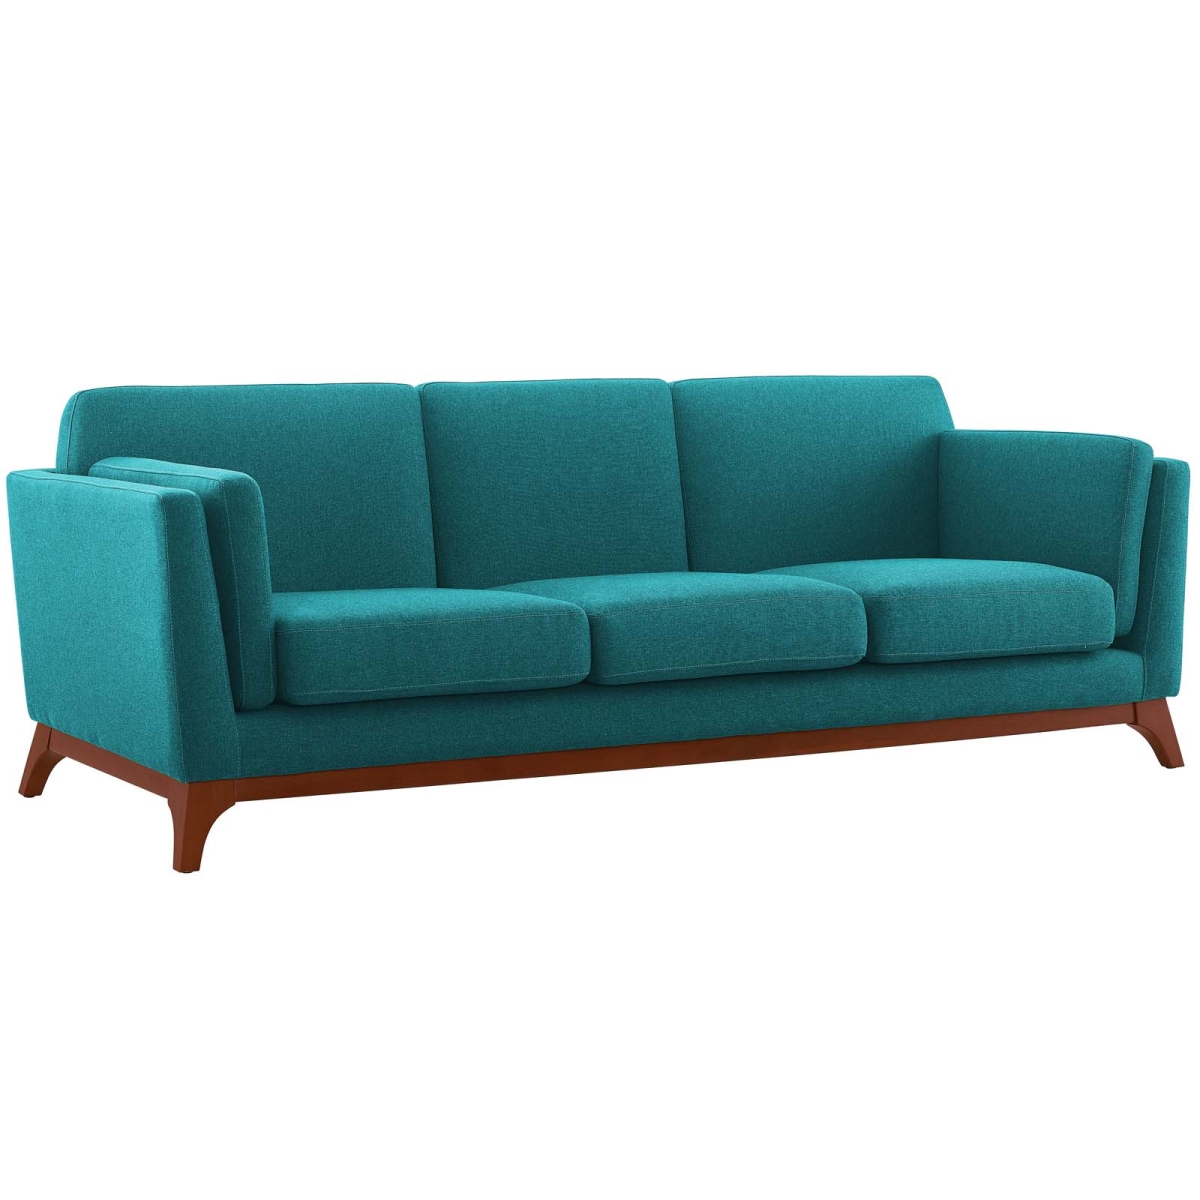 Eei-3062-tea Chance Upholstered Fabric Sofa - Teal, 30 X 35 X 83.5 In.